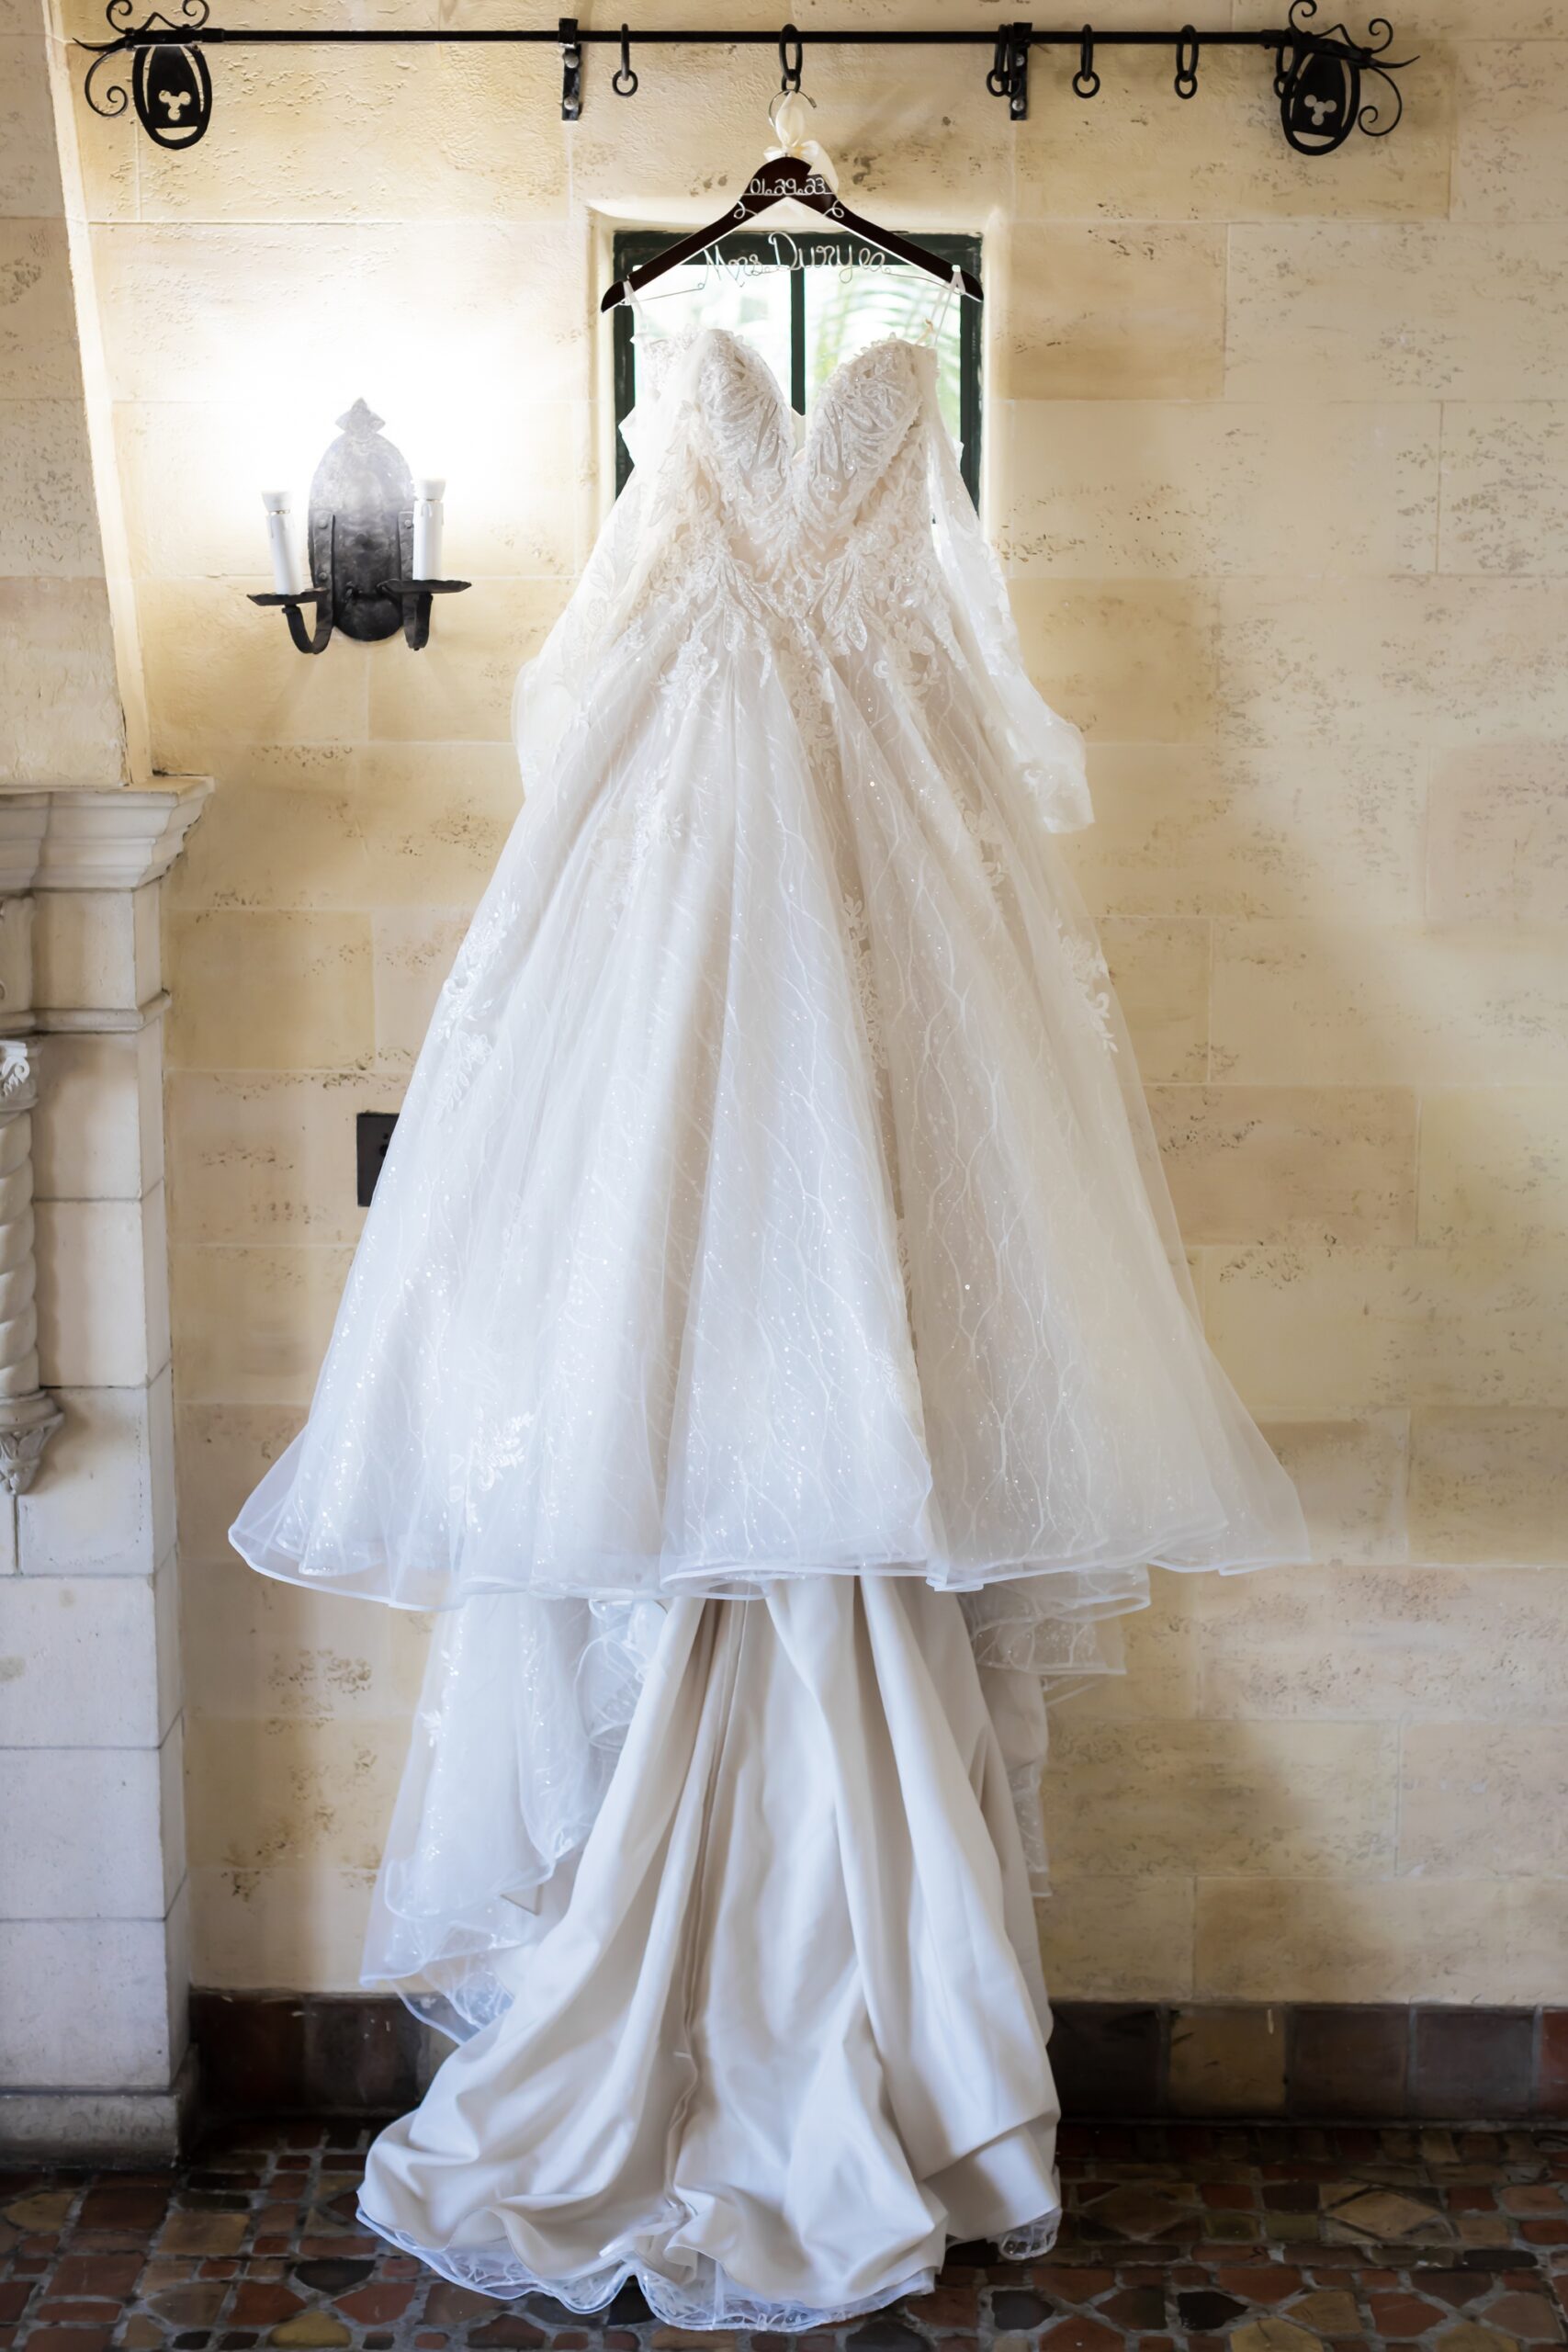 Bride's dress hanging in the window